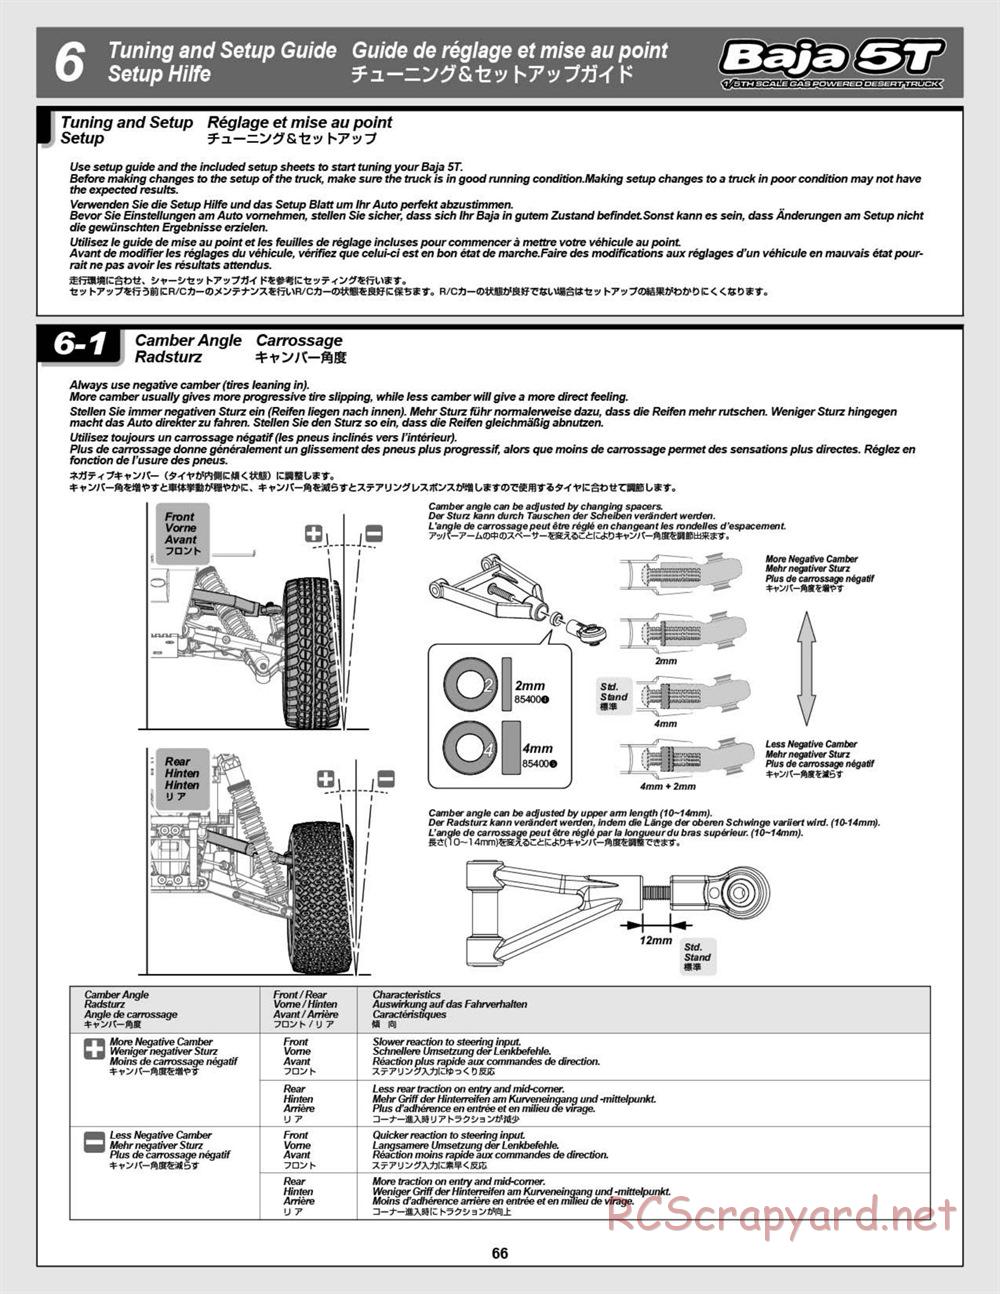 HPI - Baja 5T - Manual - Page 66